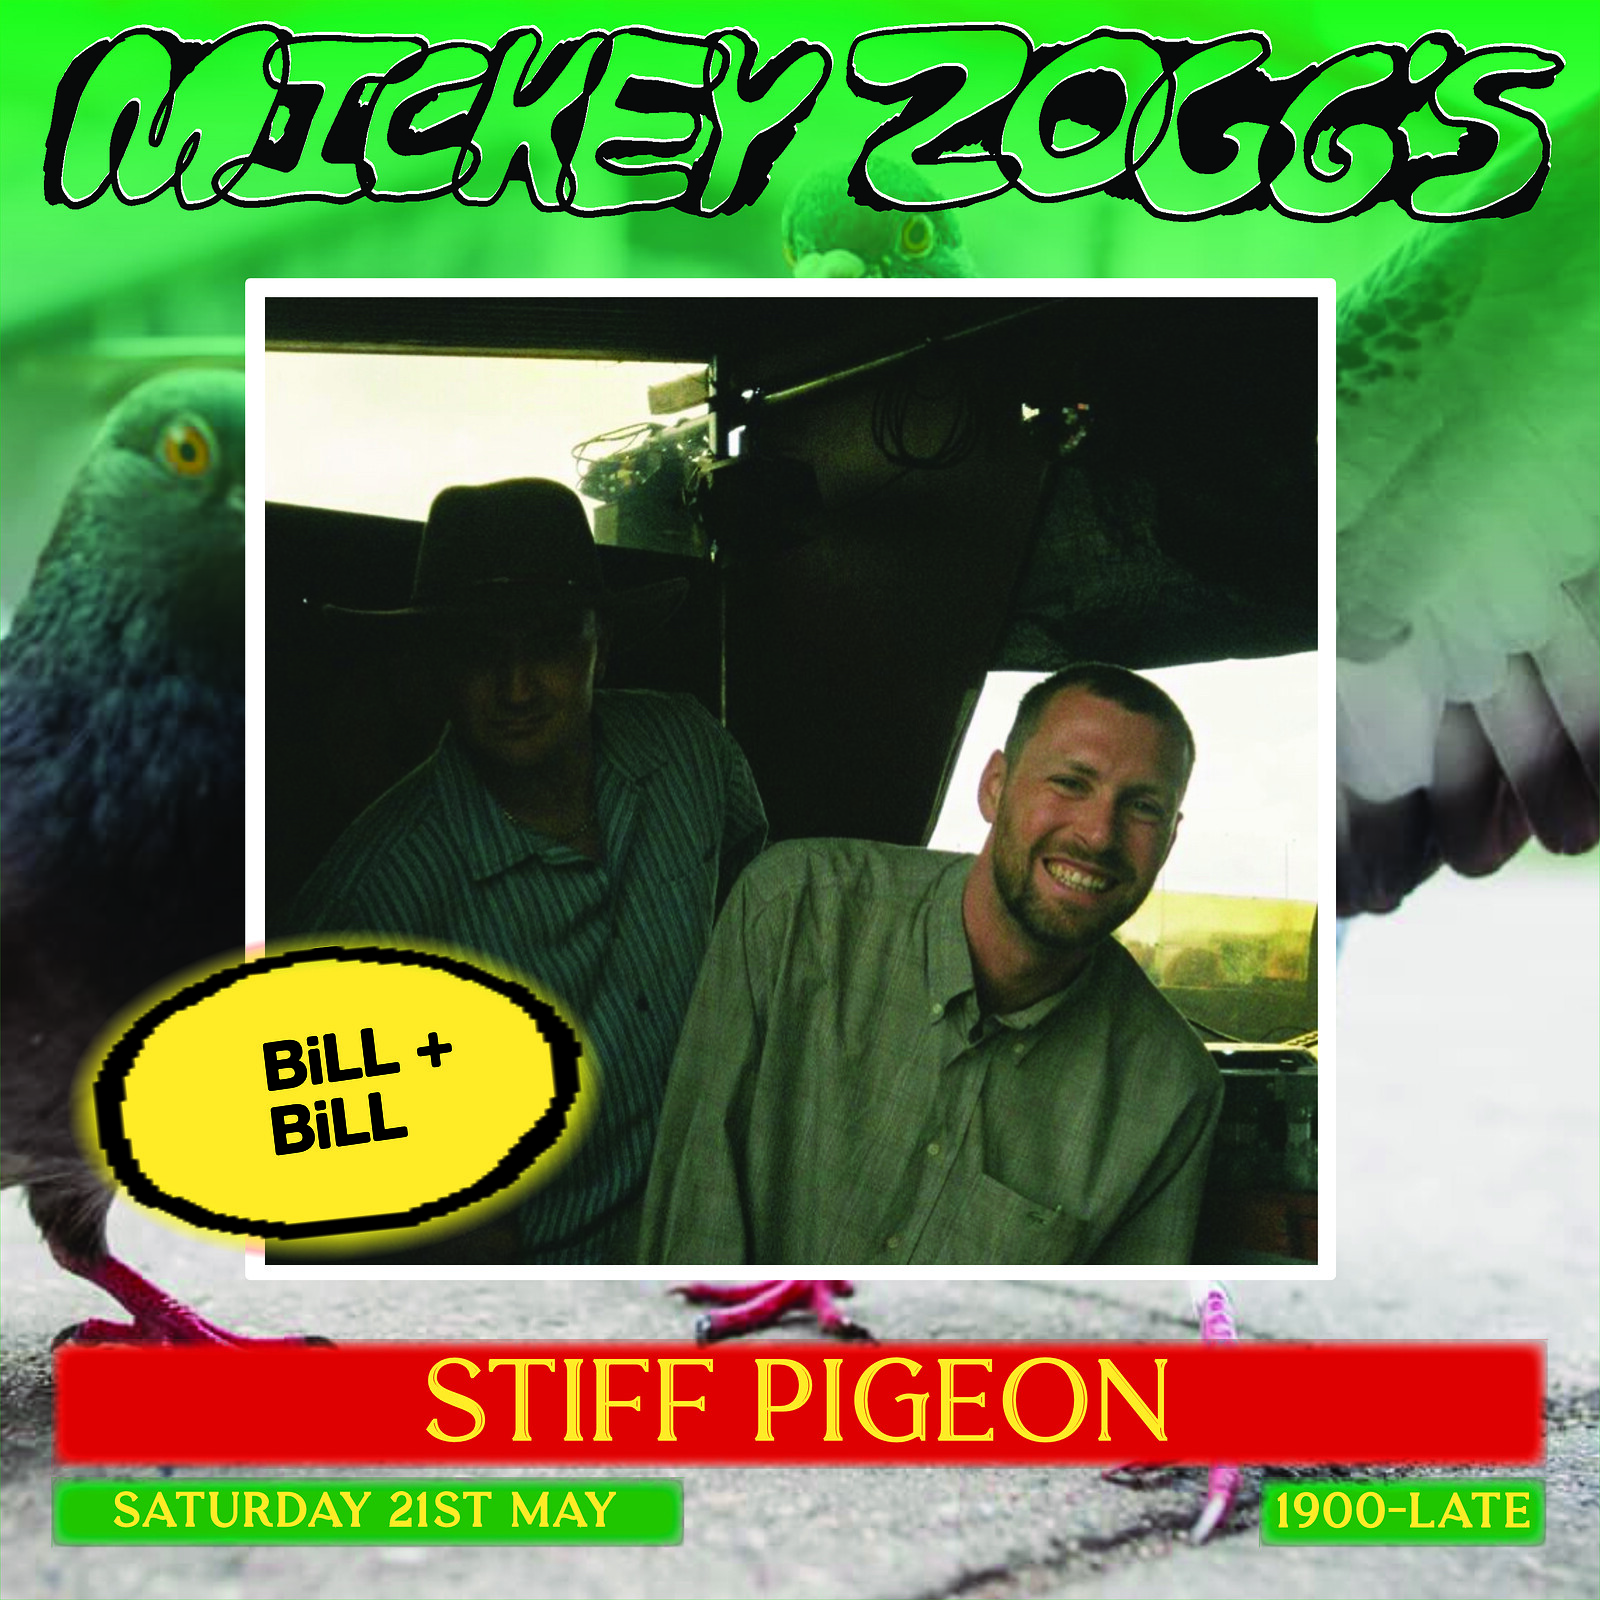 Stiff Pigeon at Mickey Zoggs